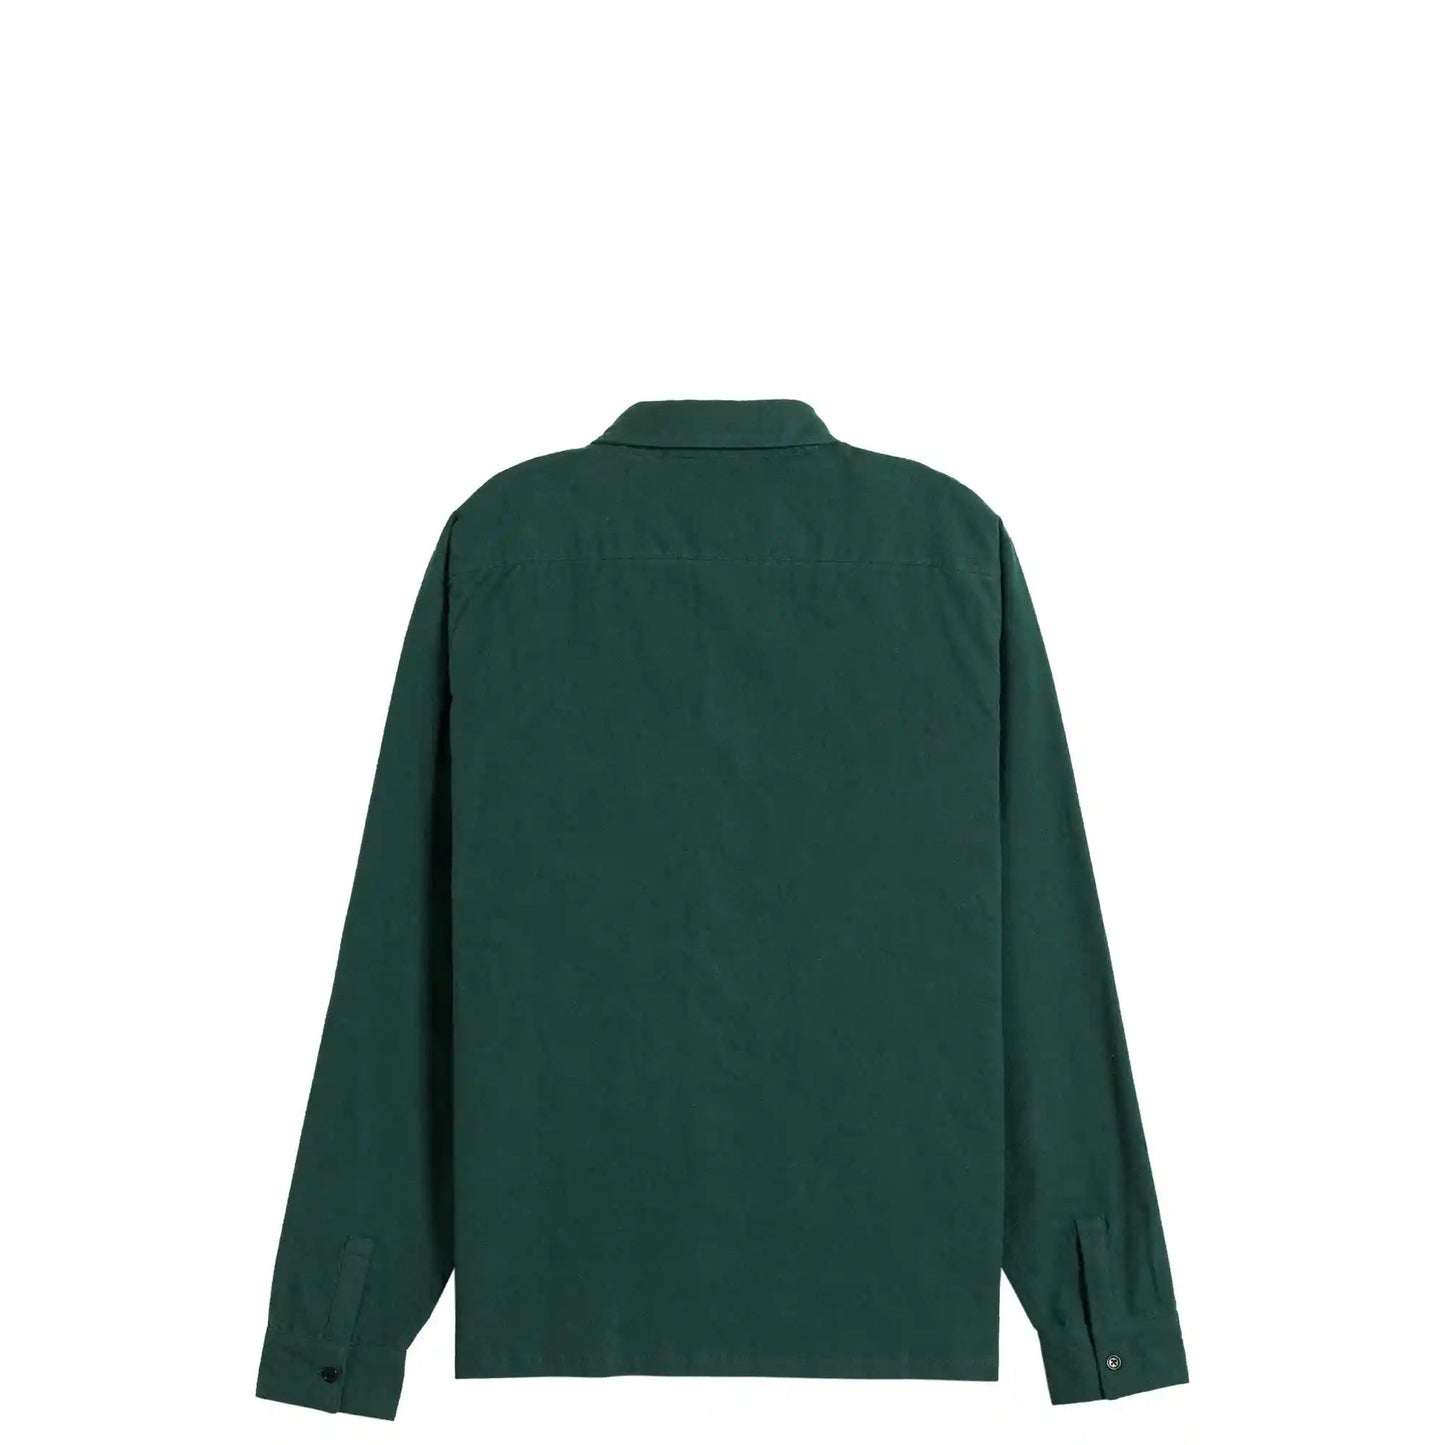 Anti Hero Basic Eagle Flannel Shirt Custom Shirt, dark green w black embroidery - Tiki Room Skateboards - 3